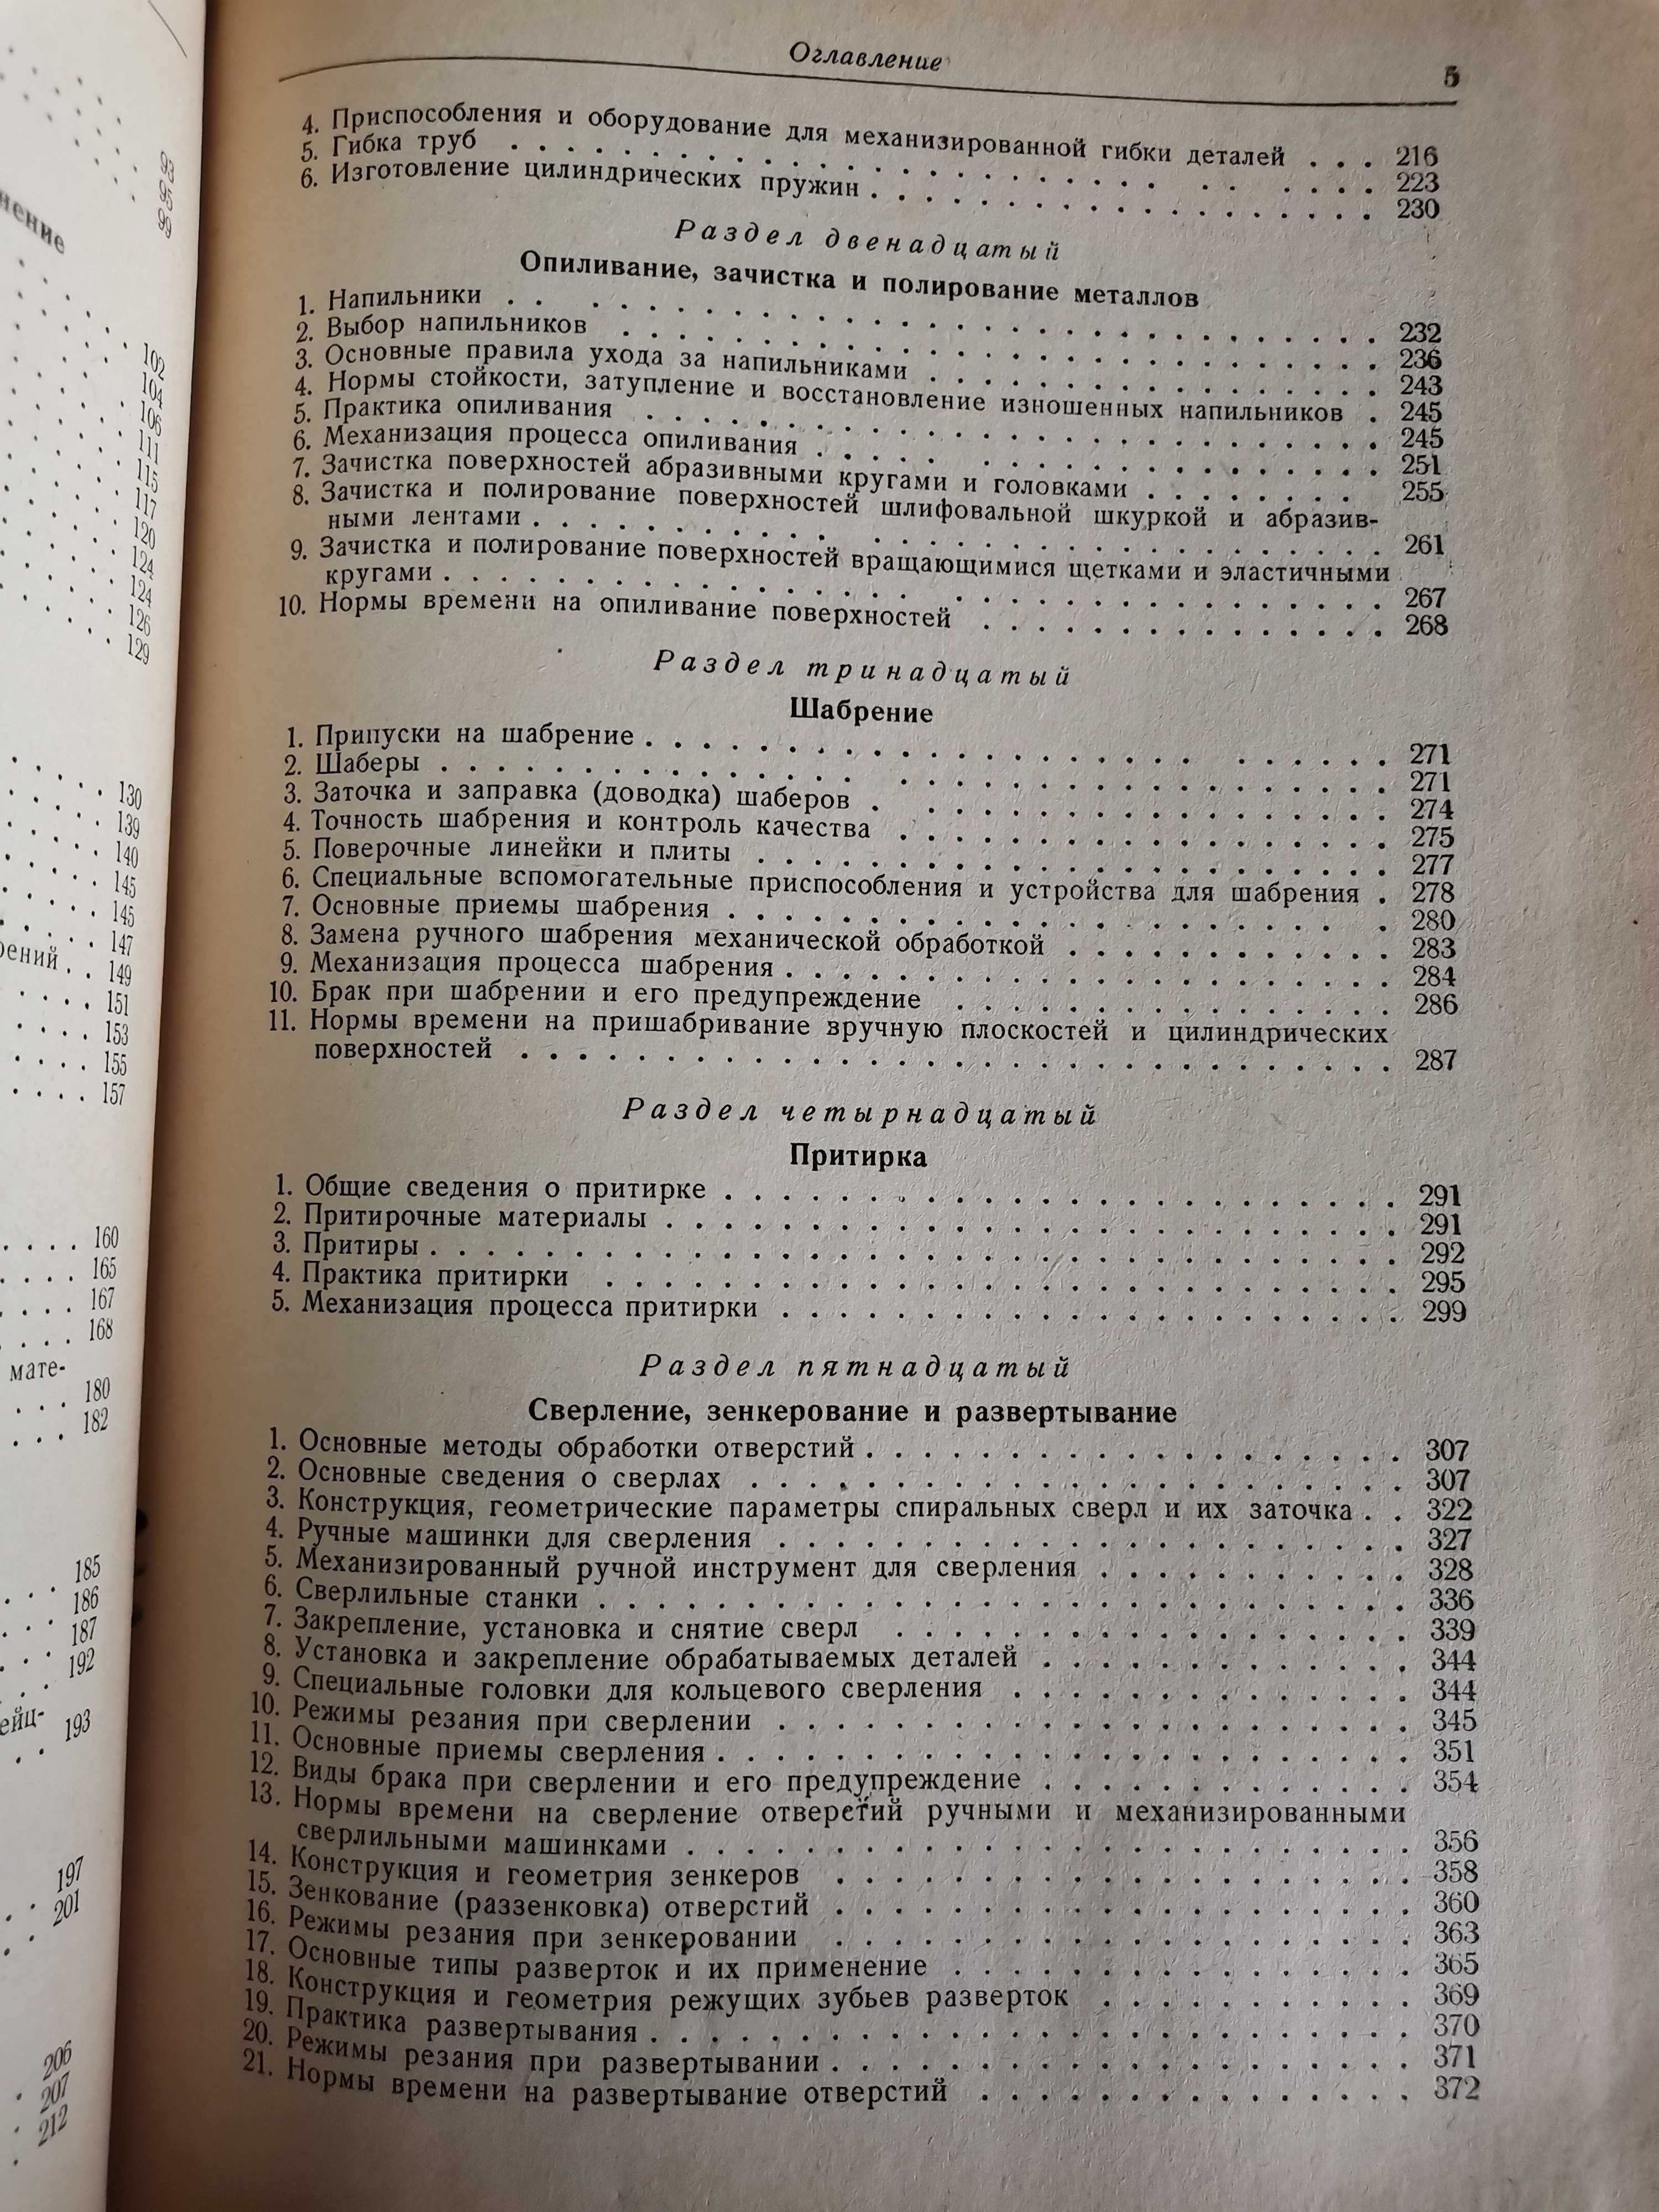 Stara Książka techniczna Cepreeb 1965 rosyjska lub ukraińska